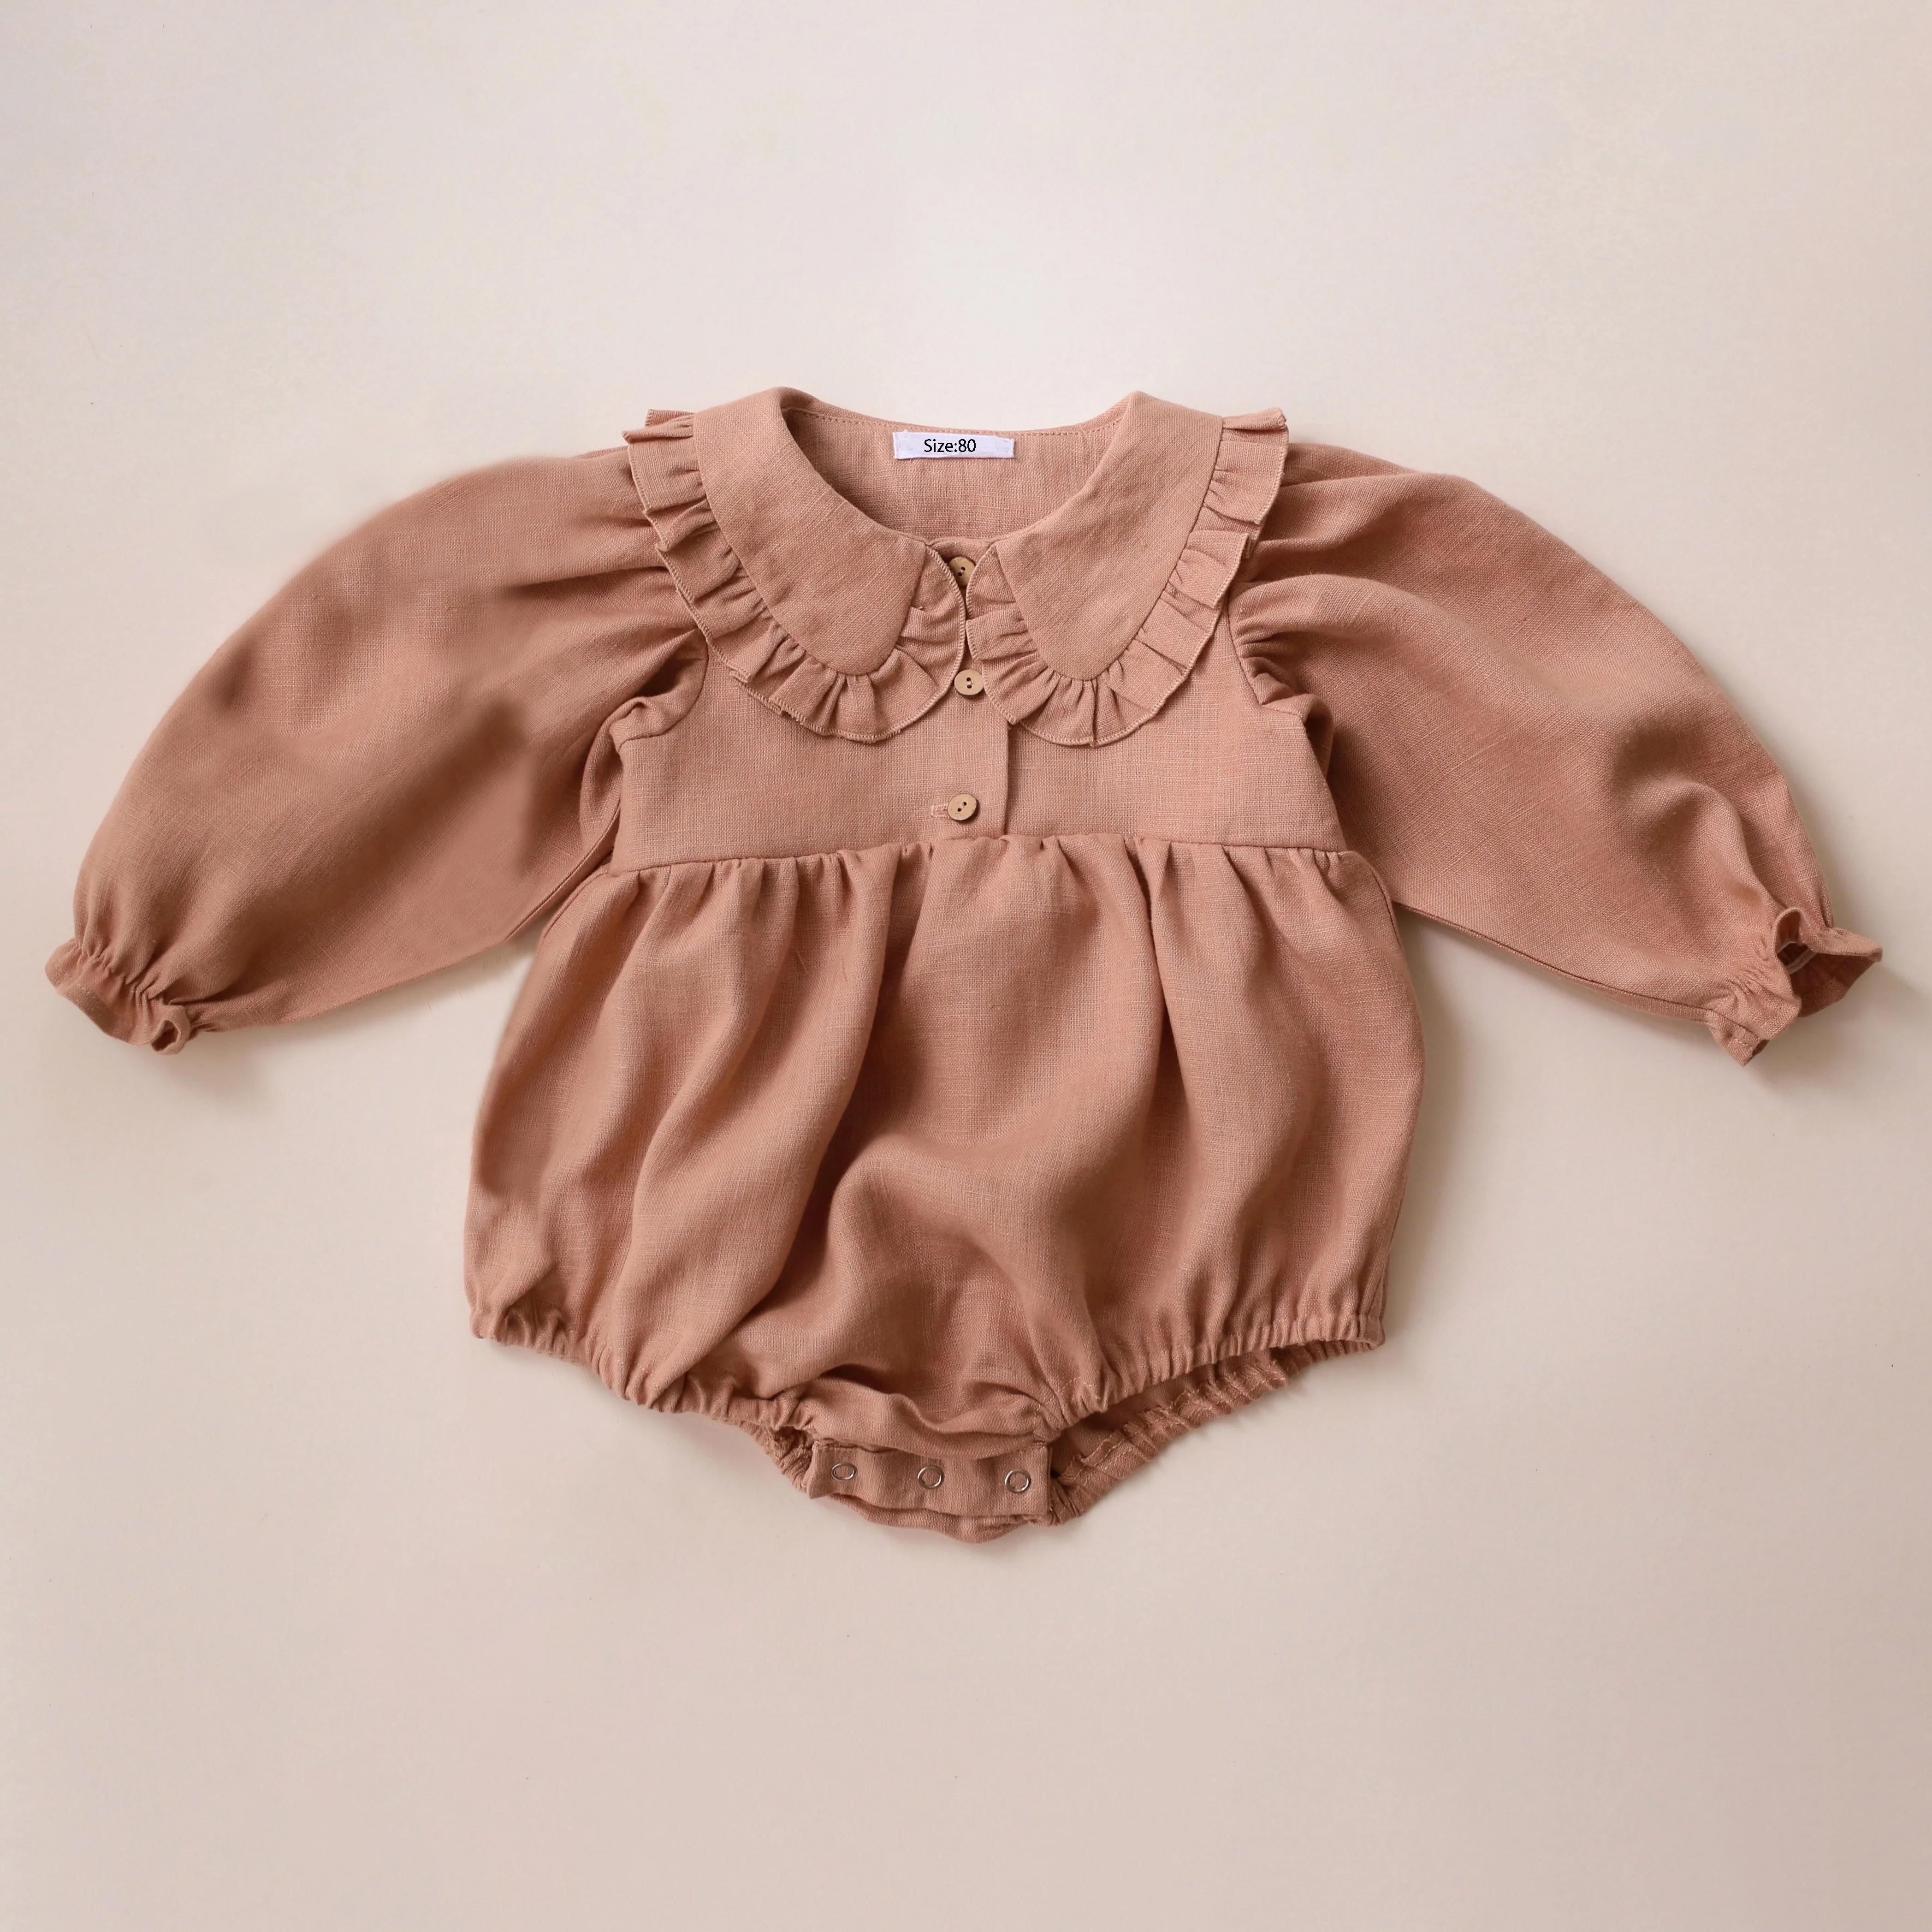 Hipapa 0-2 Years New Spring Baby Romper Newborn Linen Cotton Jumpsuit Baby Girl Clothing